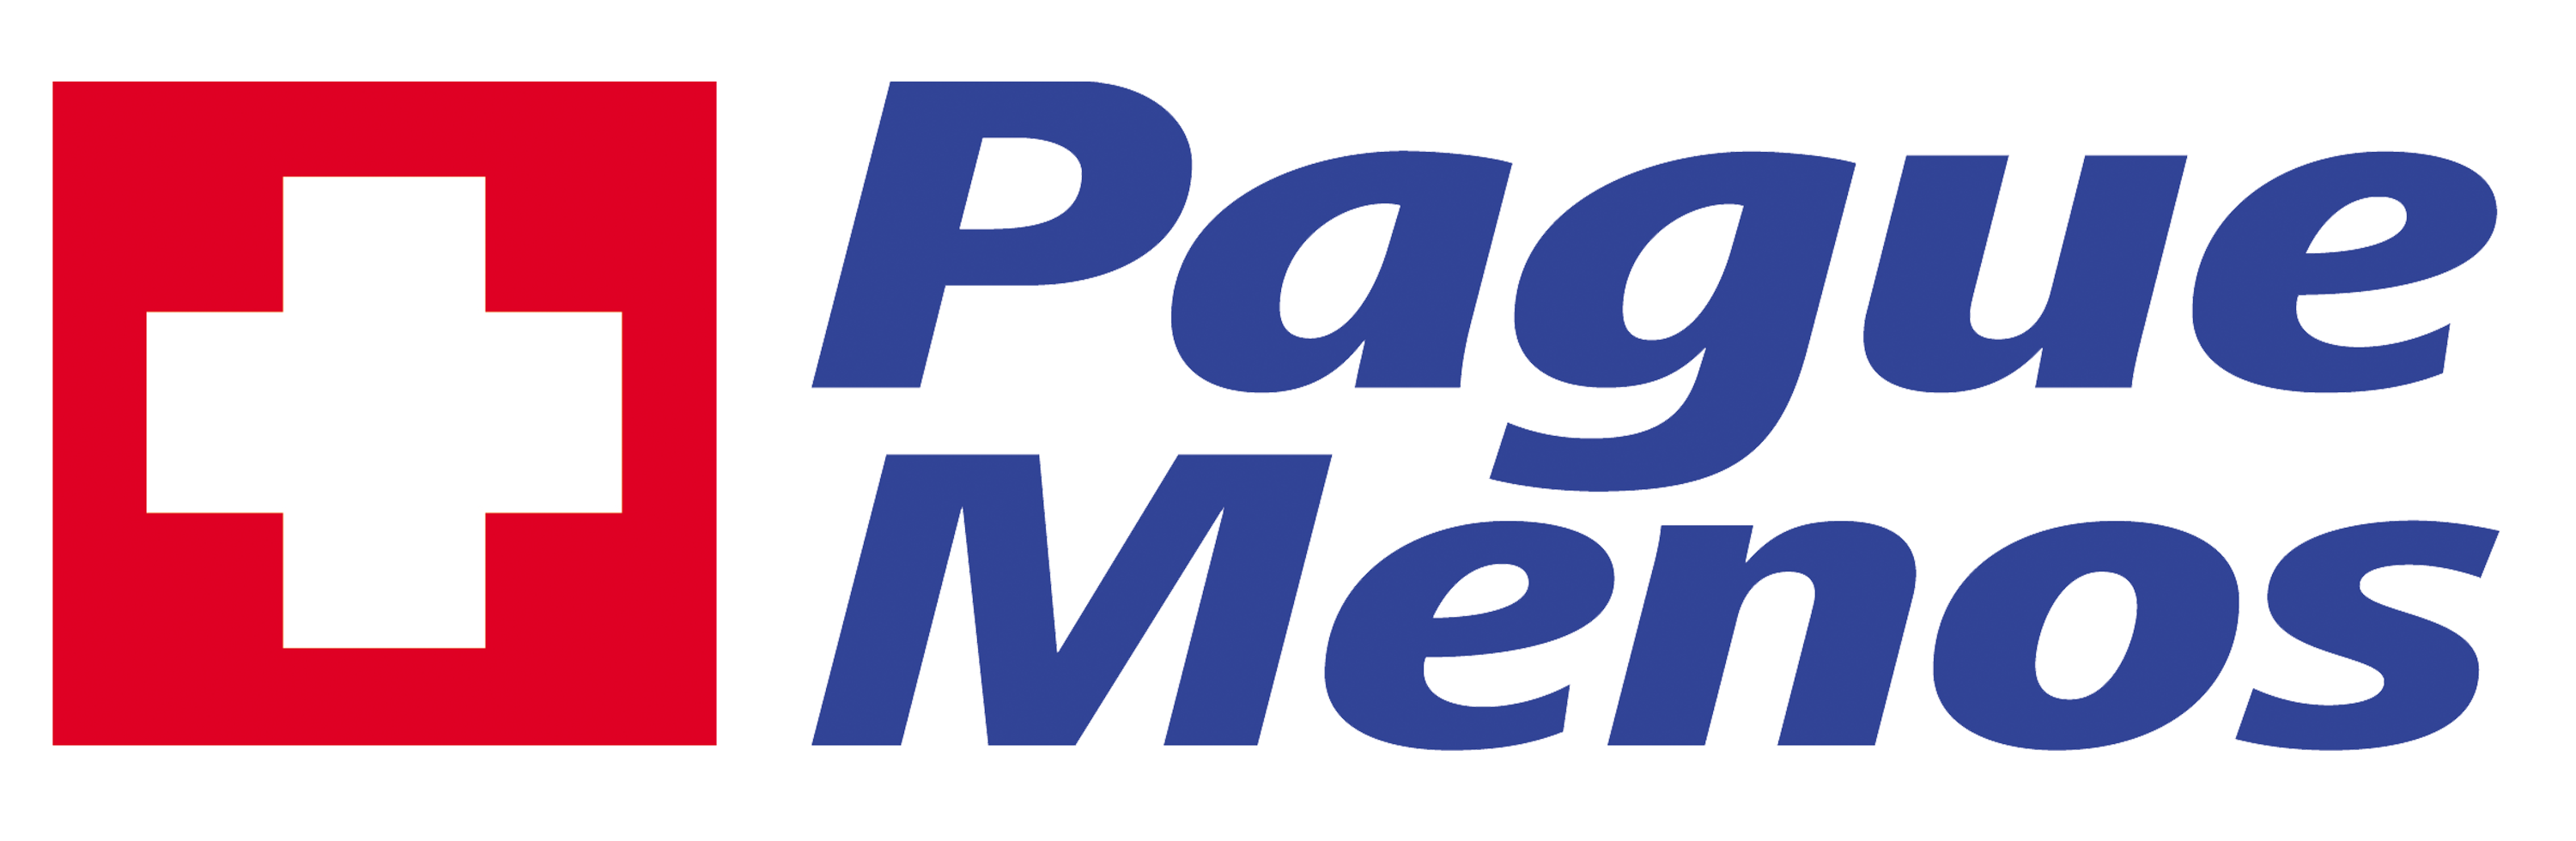 Farmacia Pague Menos - Afonso Pena 2 - MG